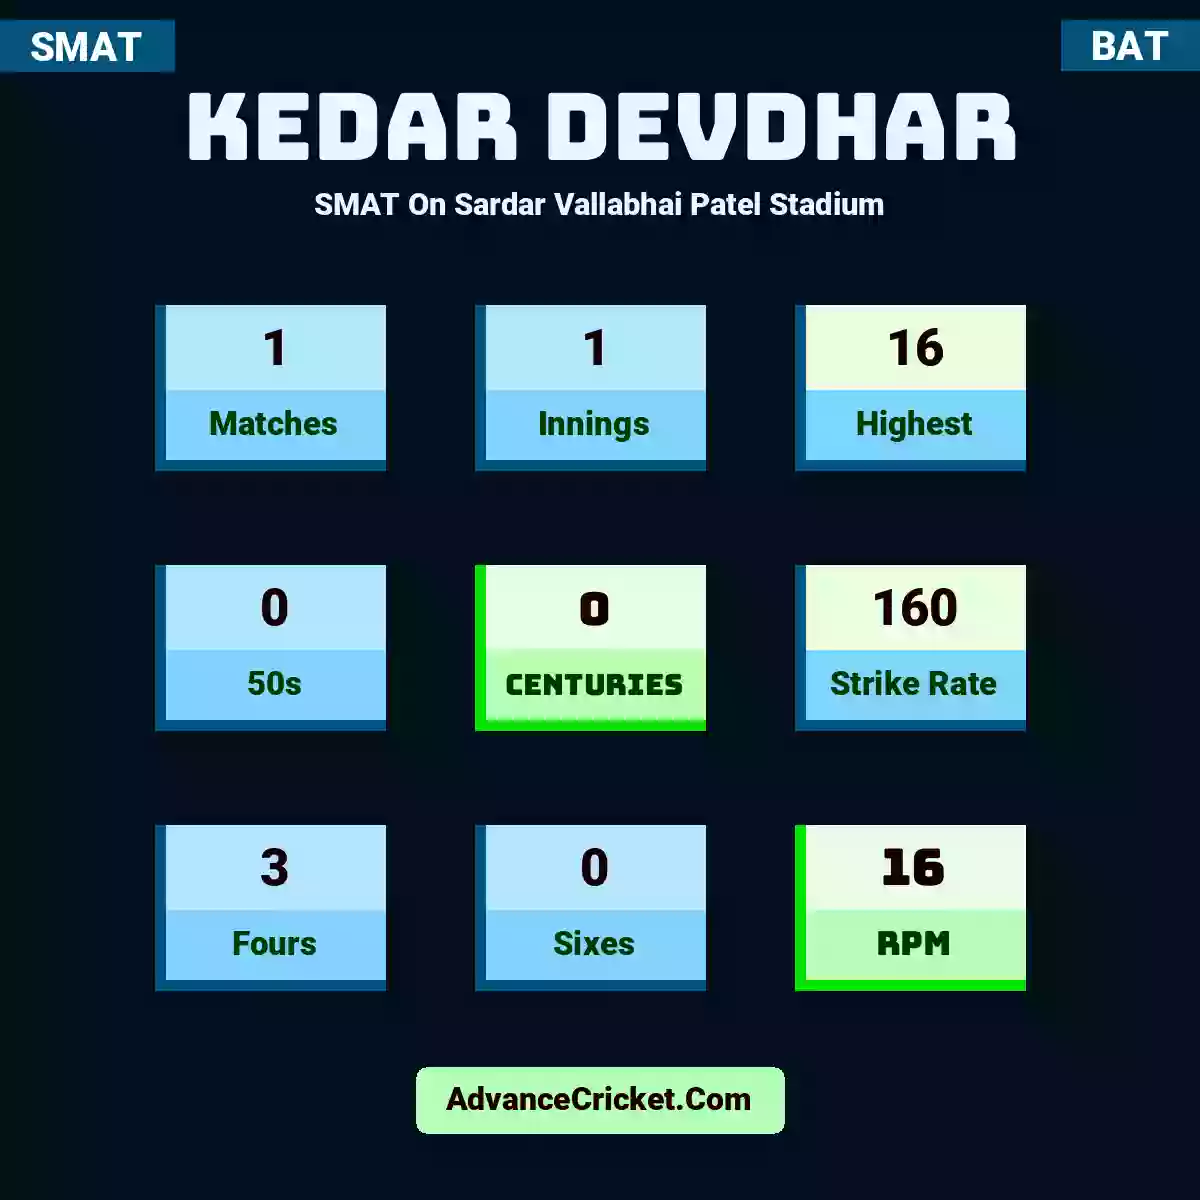 Kedar Devdhar SMAT  On Sardar Vallabhai Patel Stadium, Kedar Devdhar played 1 matches, scored 16 runs as highest, 0 half-centuries, and 0 centuries, with a strike rate of 160. K.Devdhar hit 3 fours and 0 sixes, with an RPM of 16.